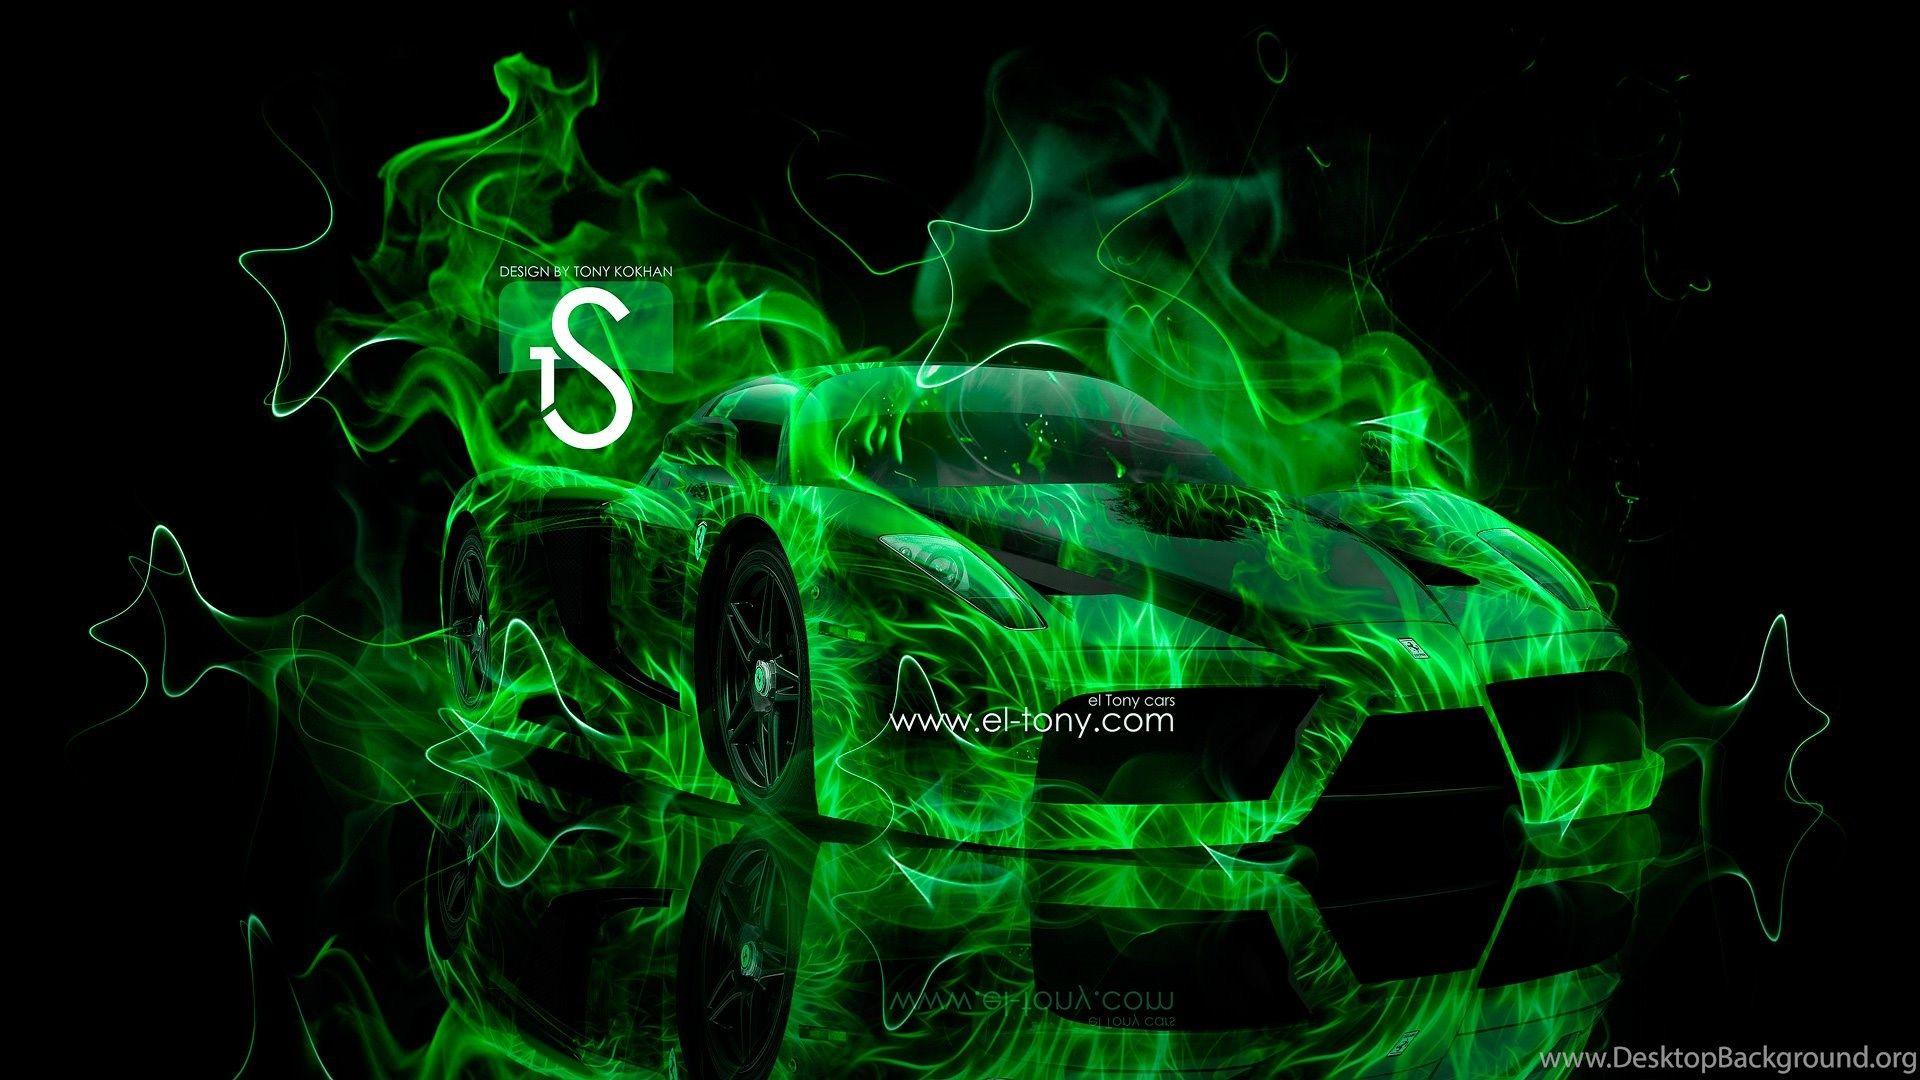 Ferrari Enzo Green Fire Car 2013 Abstract Smoke HD Wallpaper. Desktop Background